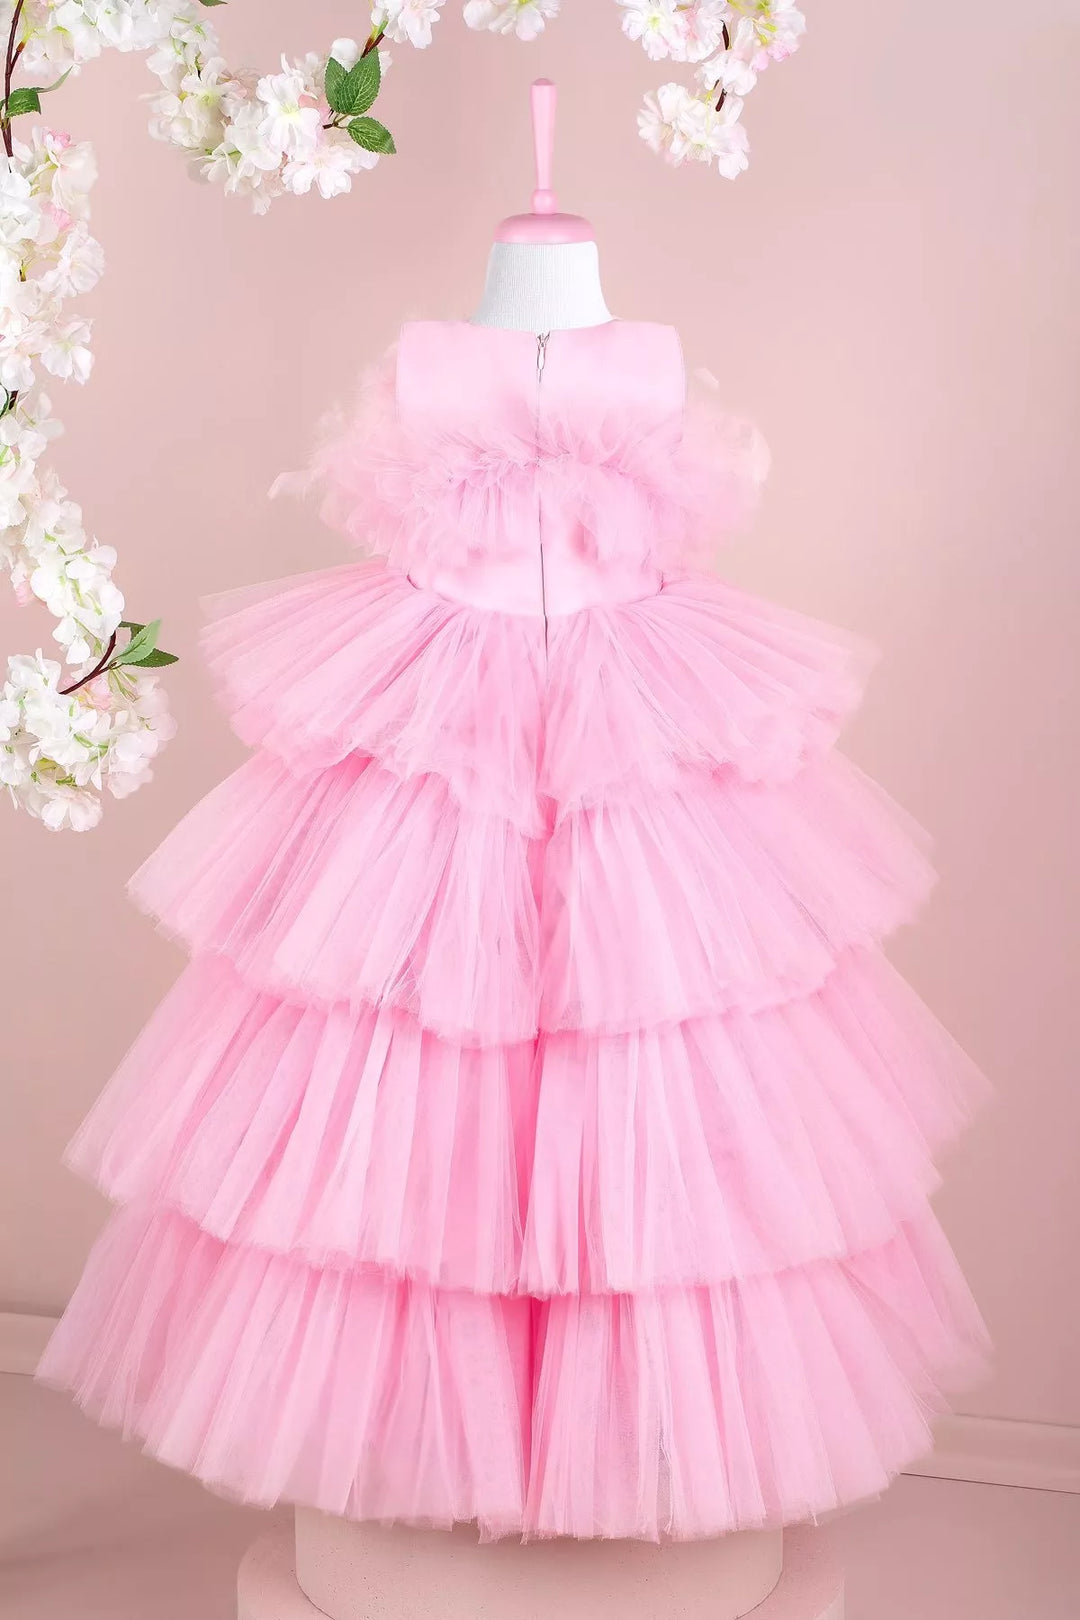 Back view of a pink princess wedding dress. The dress has floor length skirt and satin top